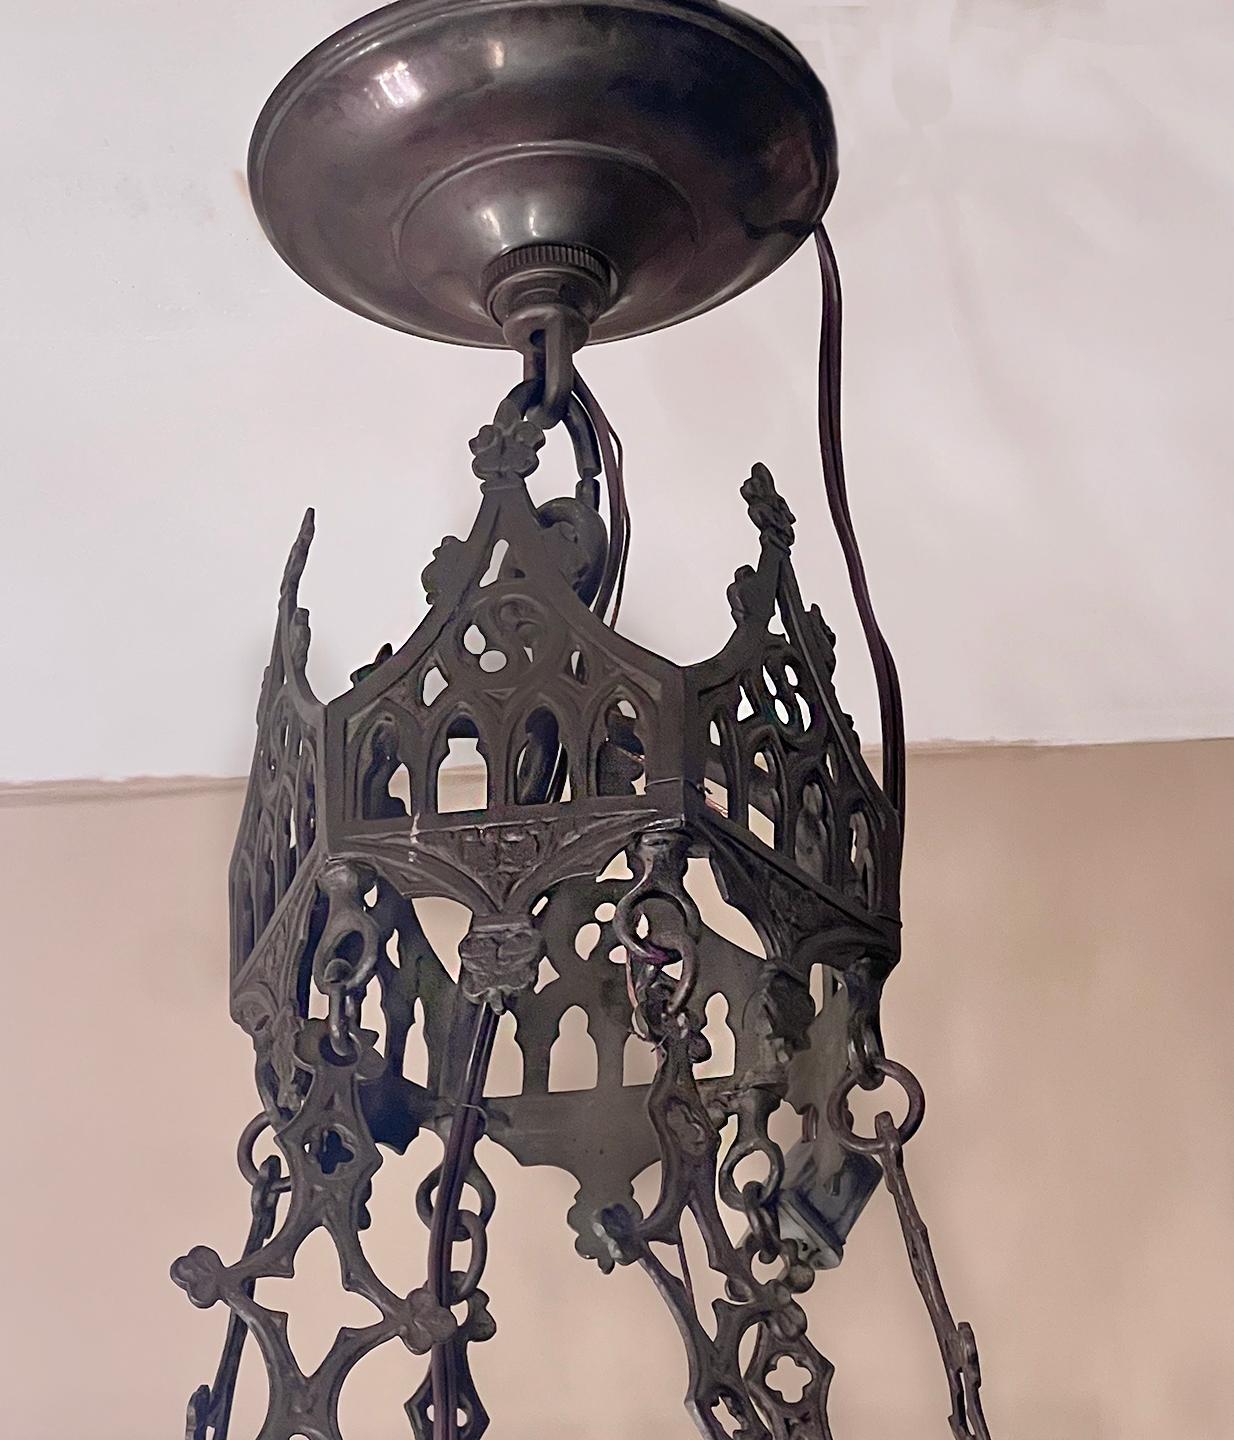 A circa 1900 Italian bronze Gothic-style chandelier with original patina.

Measurements:
Minimum Drop: 55